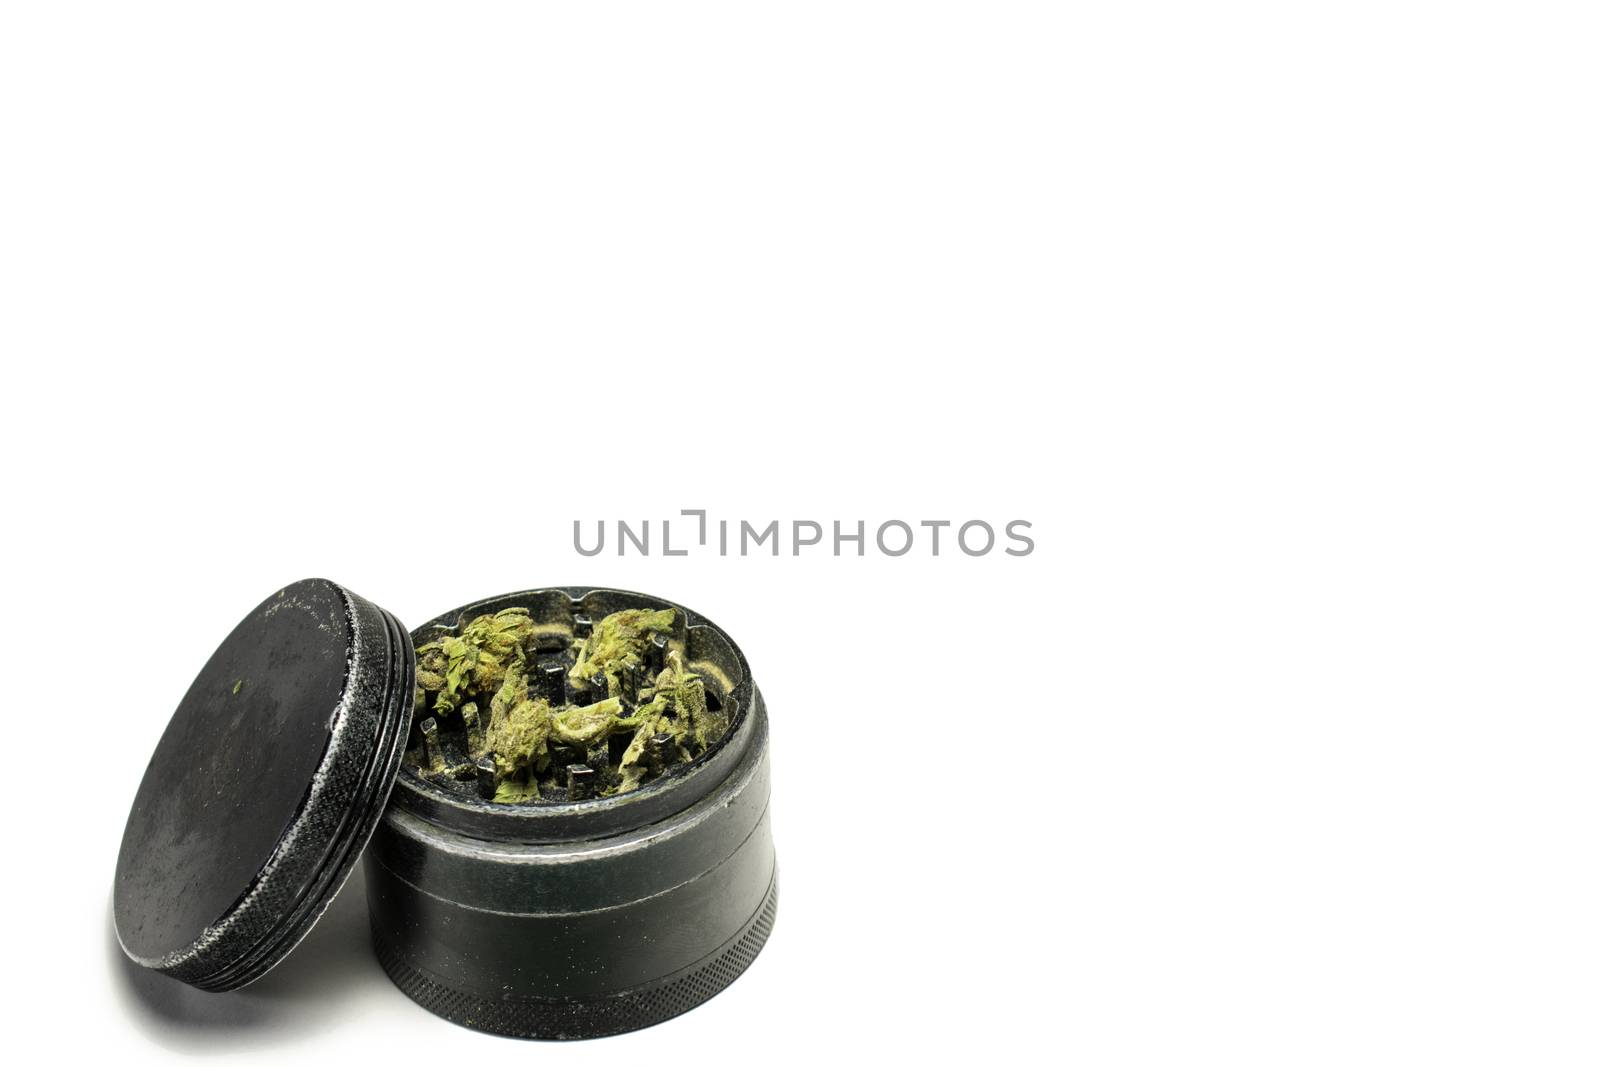 A Black Grinder Full of Marijuana by bju12290